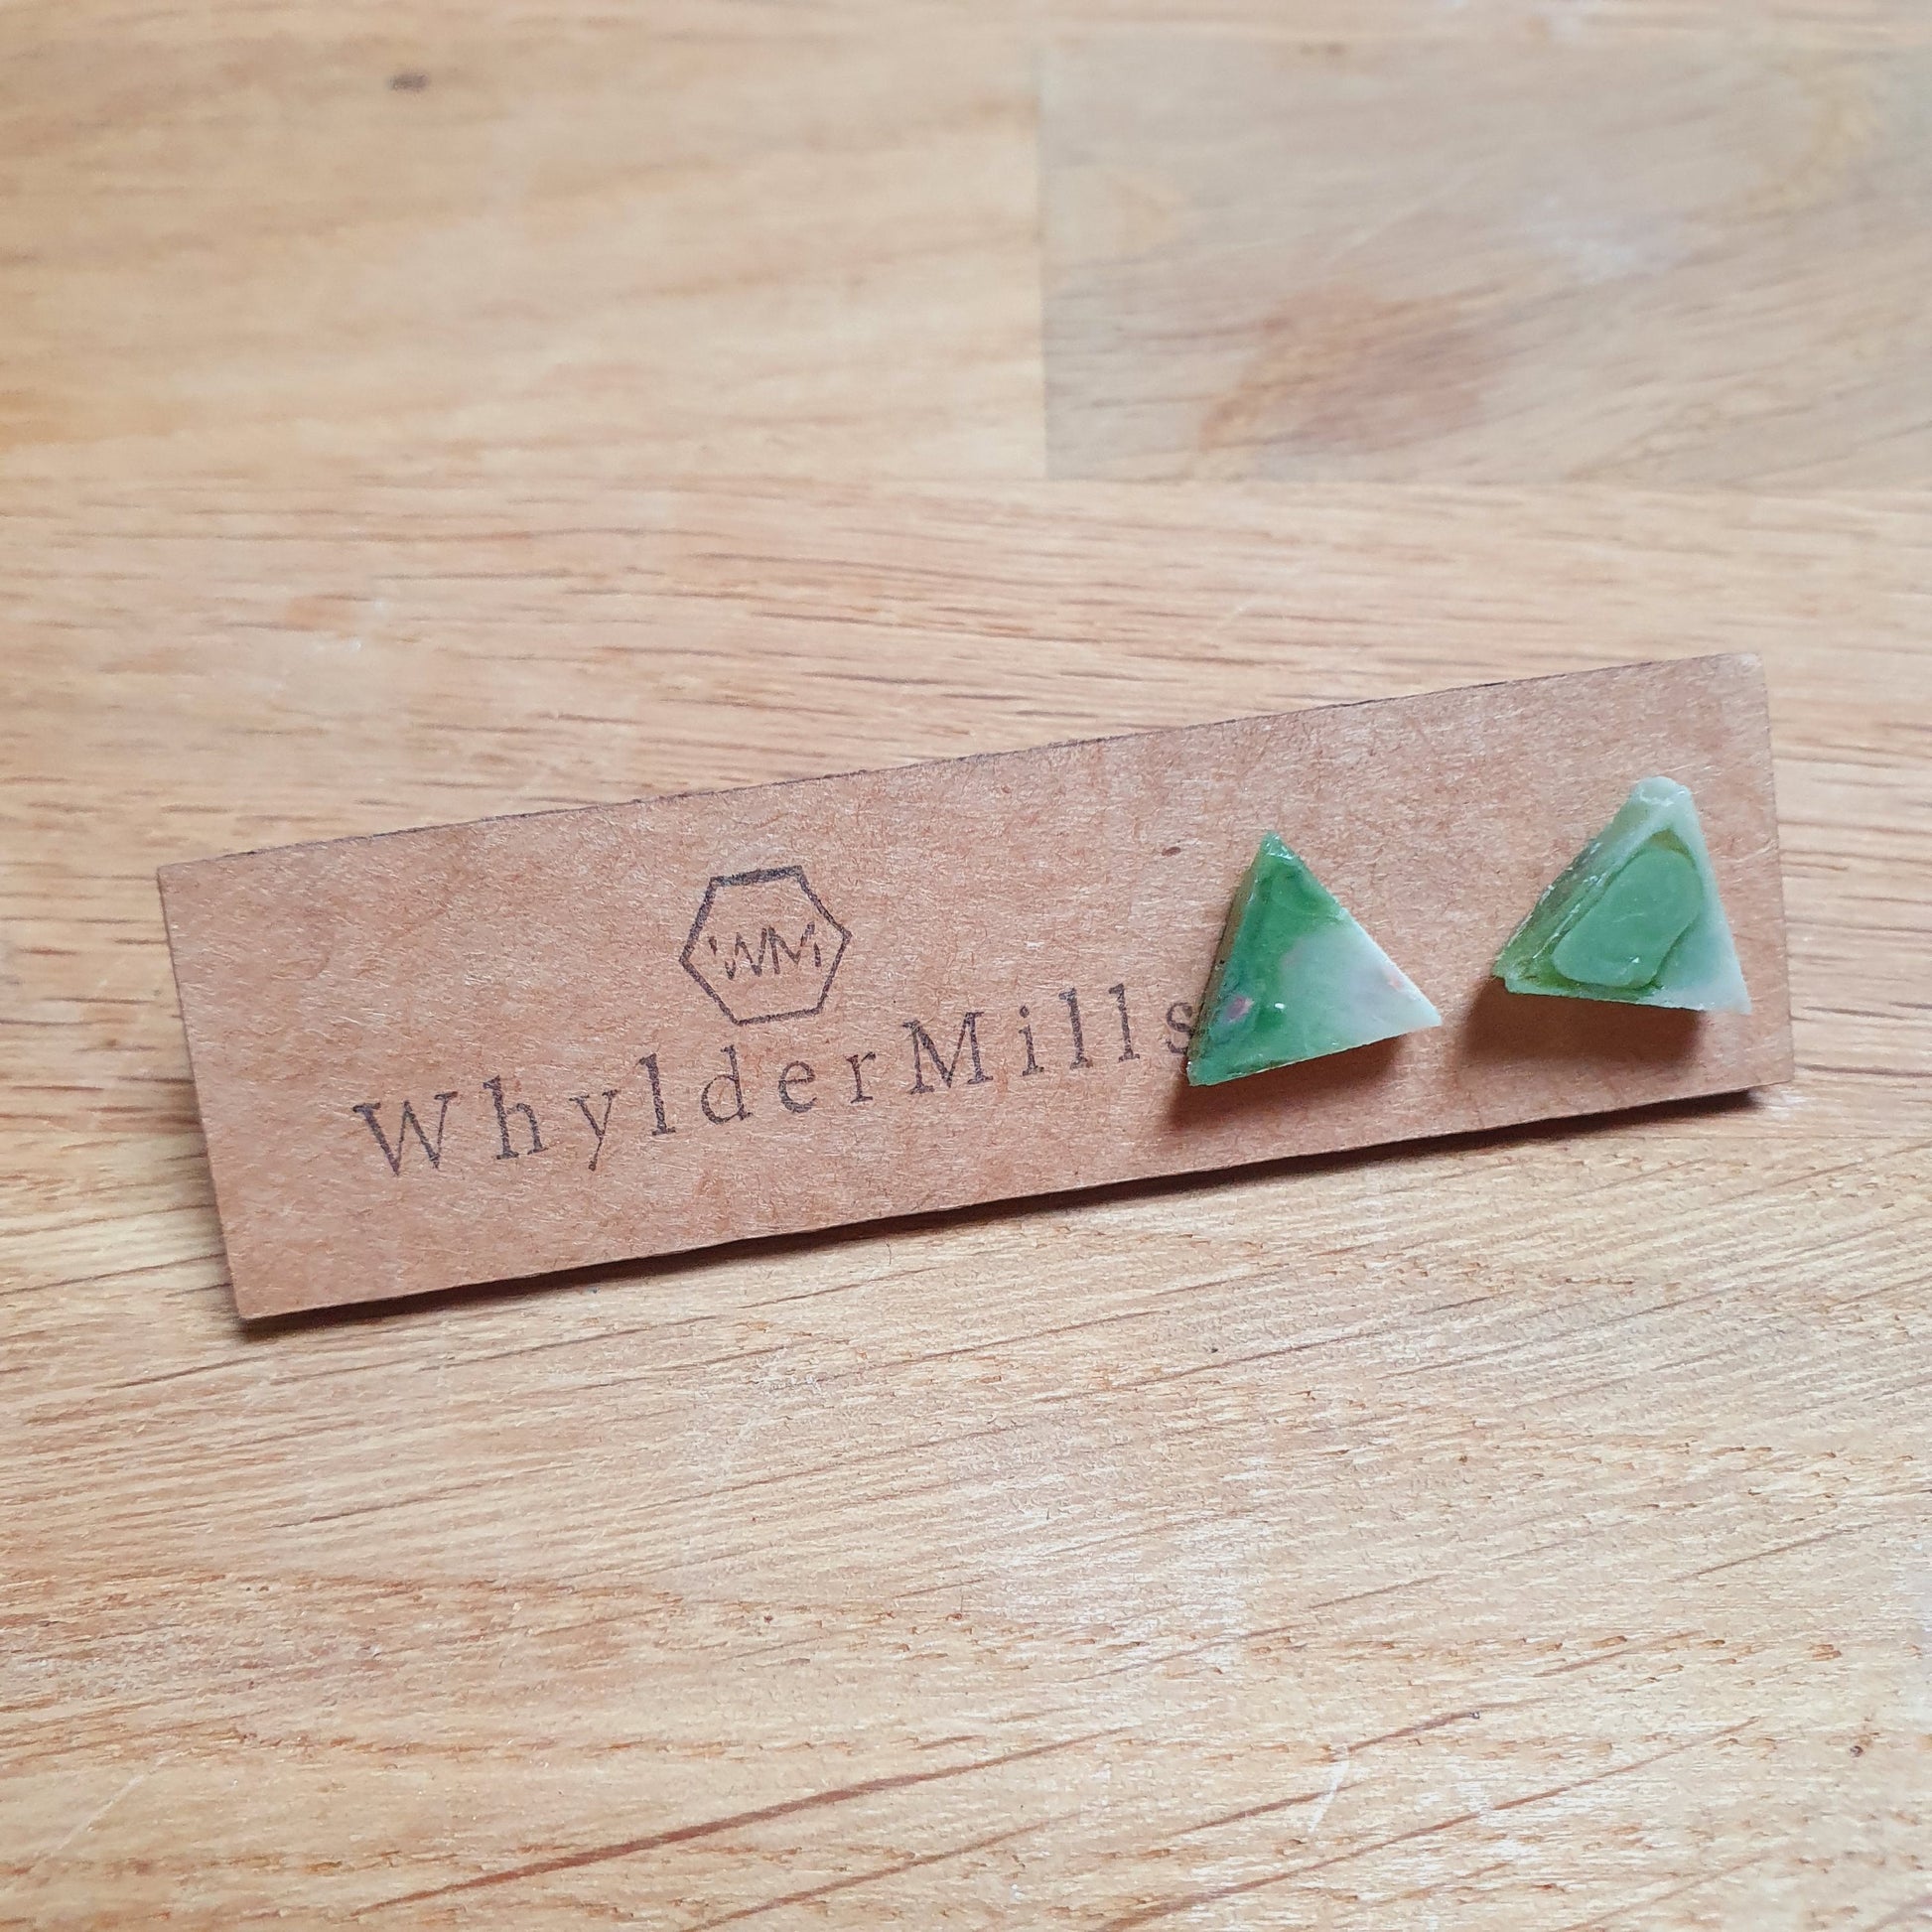 Triangle Studs - Whylder Mills - Loola Loves UK